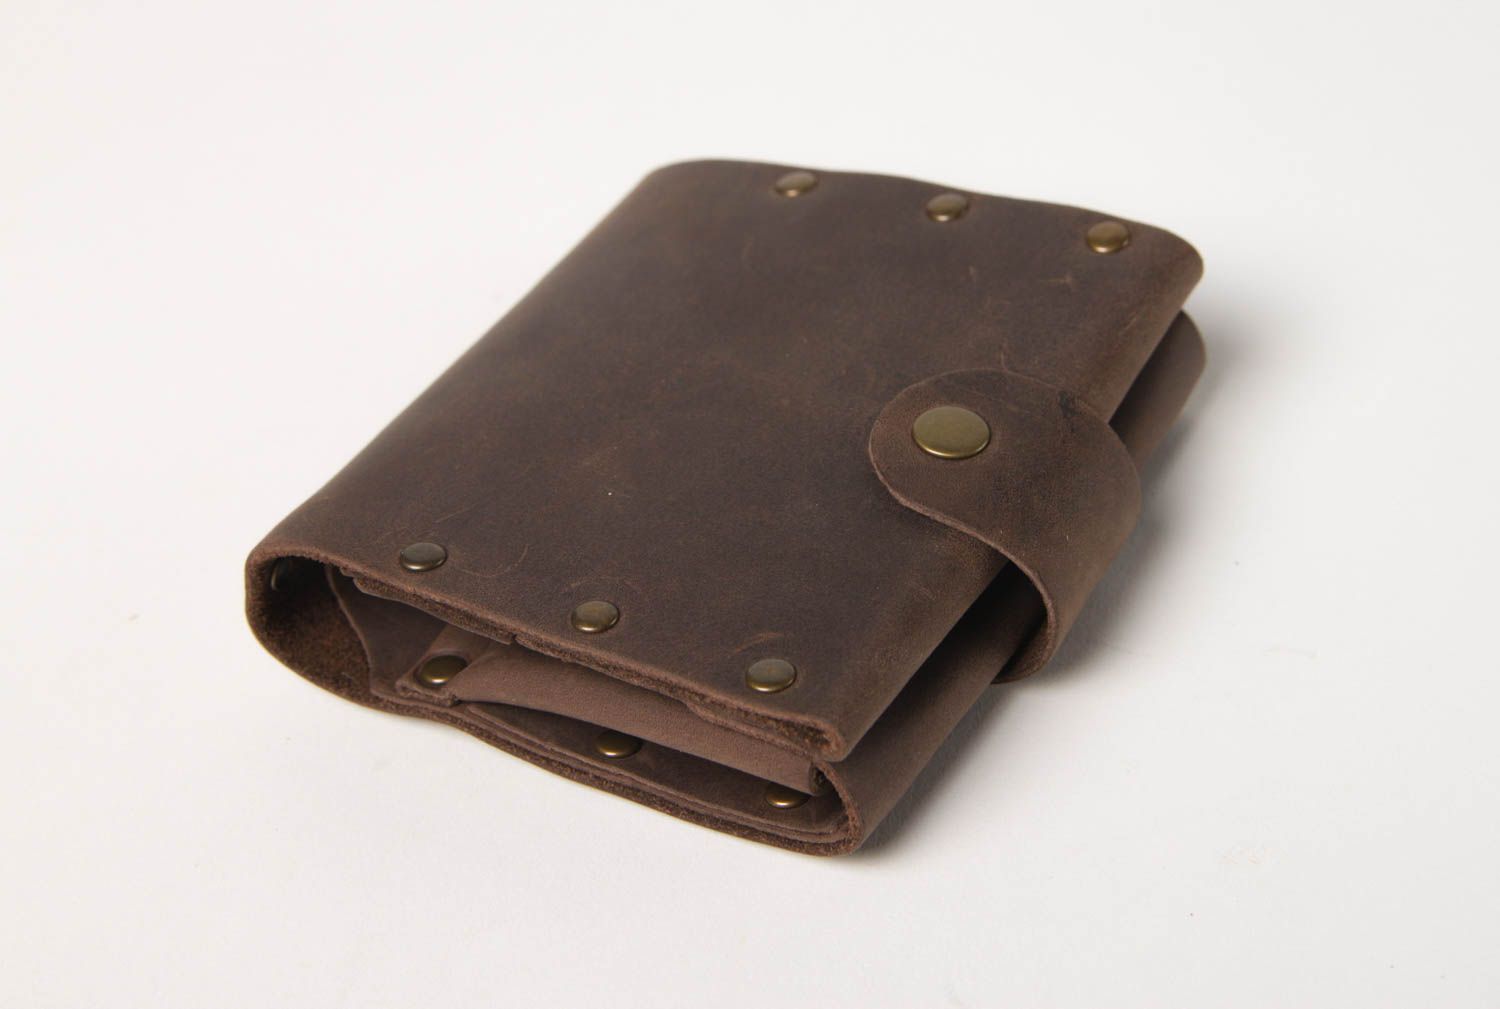 Stylish handmade leather purse designer accessories leather goods gift ideas photo 2